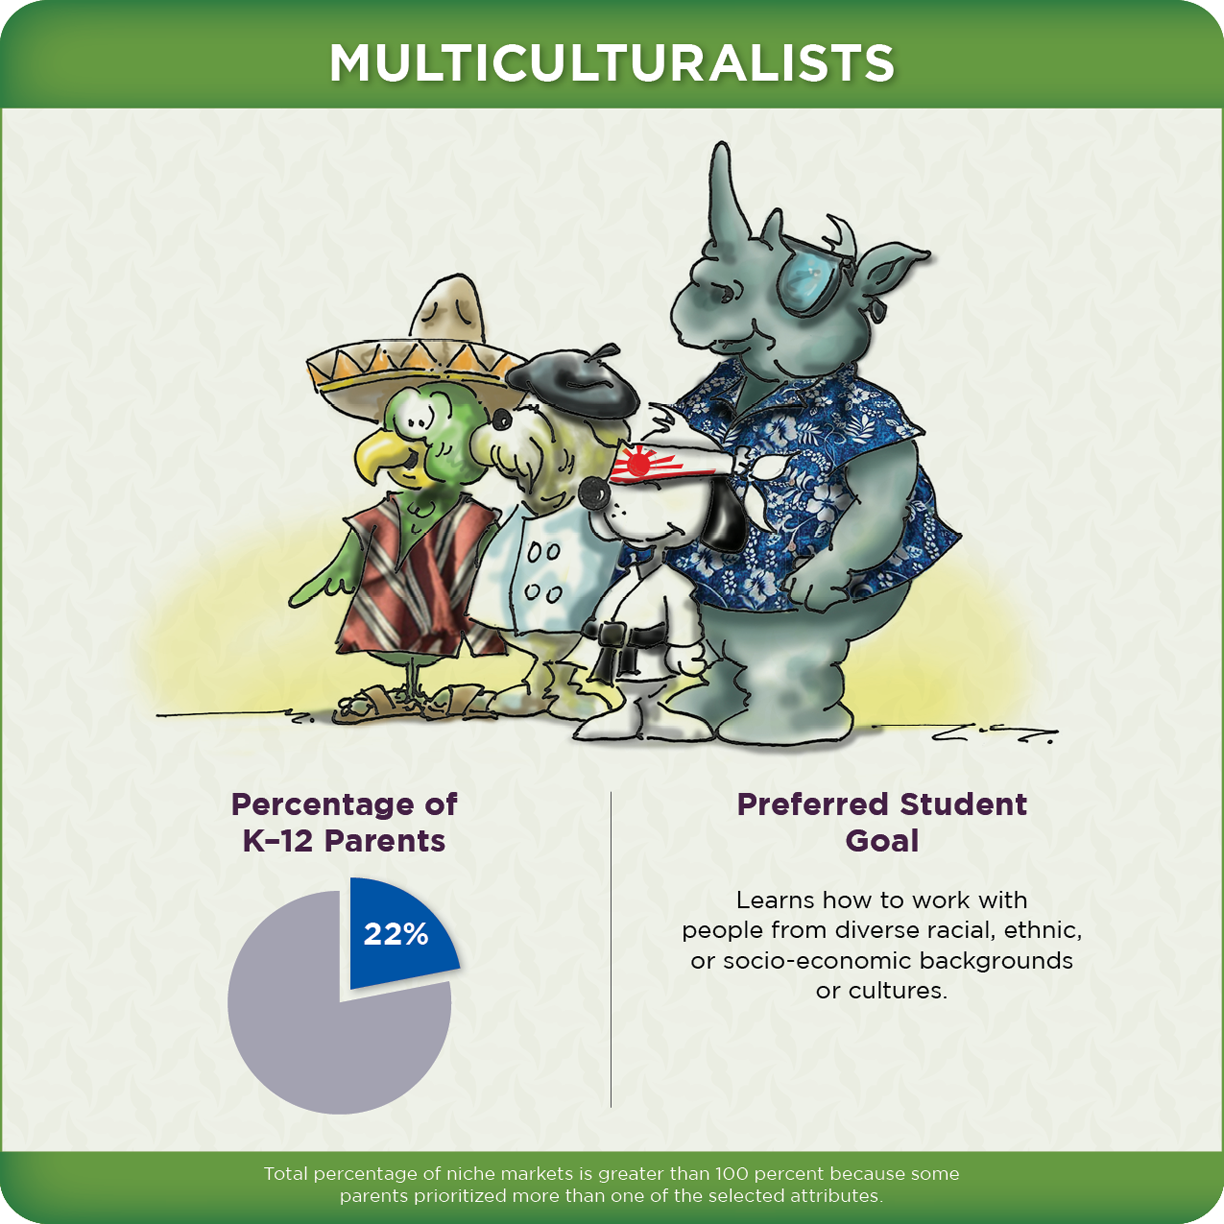 Multiculturalists